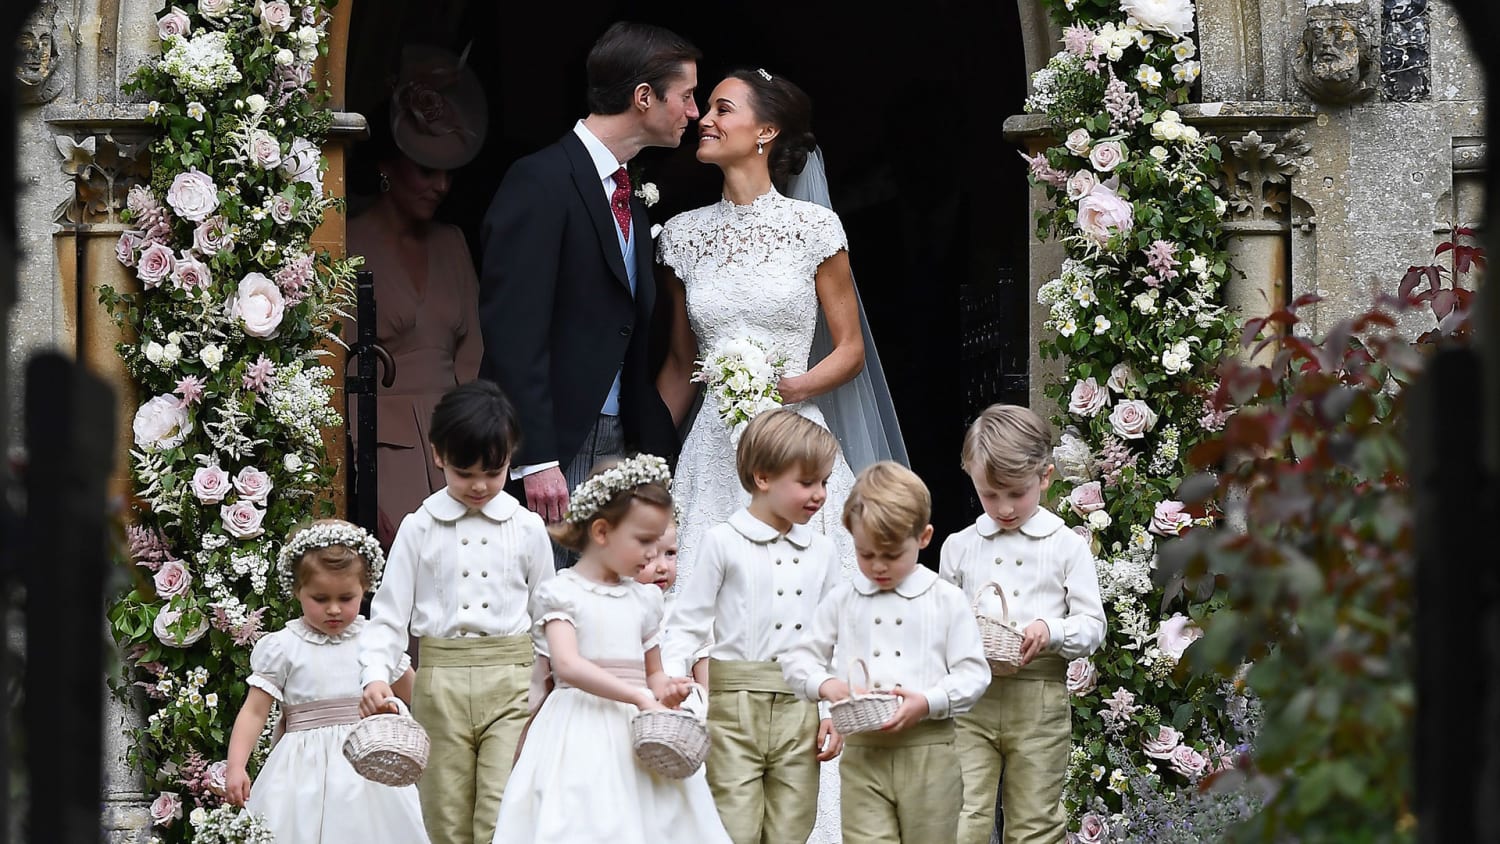 Middleton wedding: Kate Middleton's sister marries James Matthews